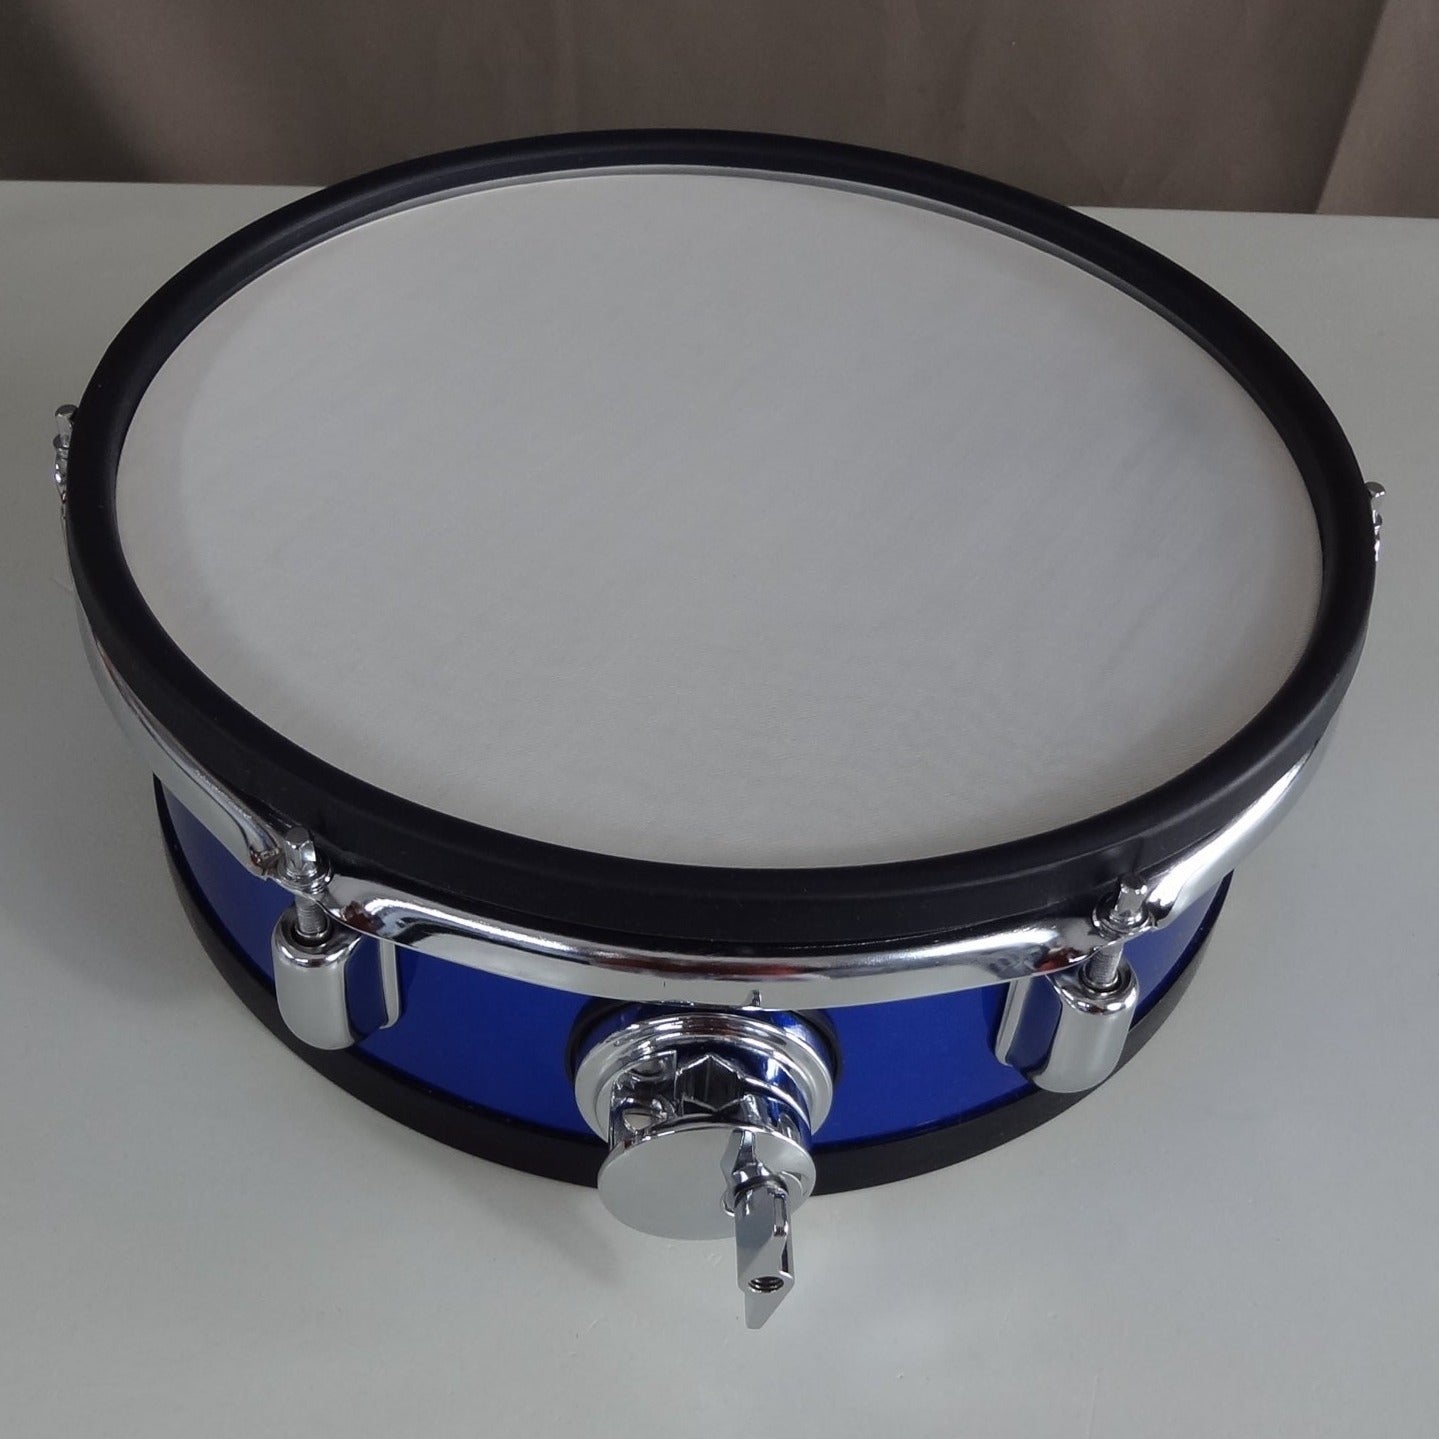 New 12 Inch Custom Electronic Snare Drum - Blue Metallic